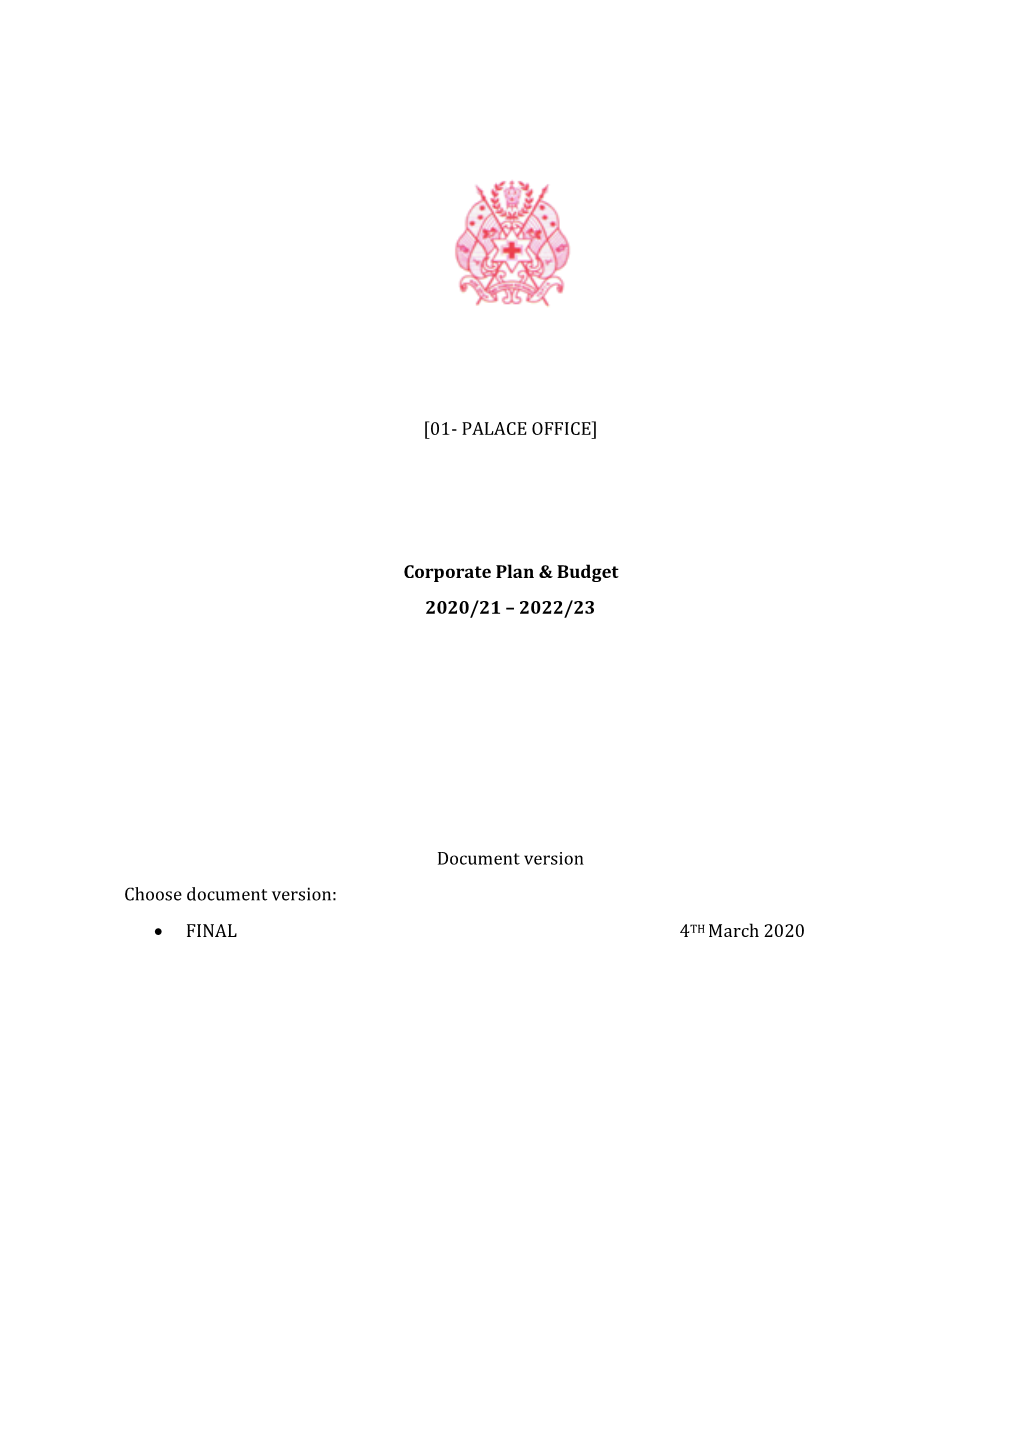 Palace Office Corporate Plan Draft 1